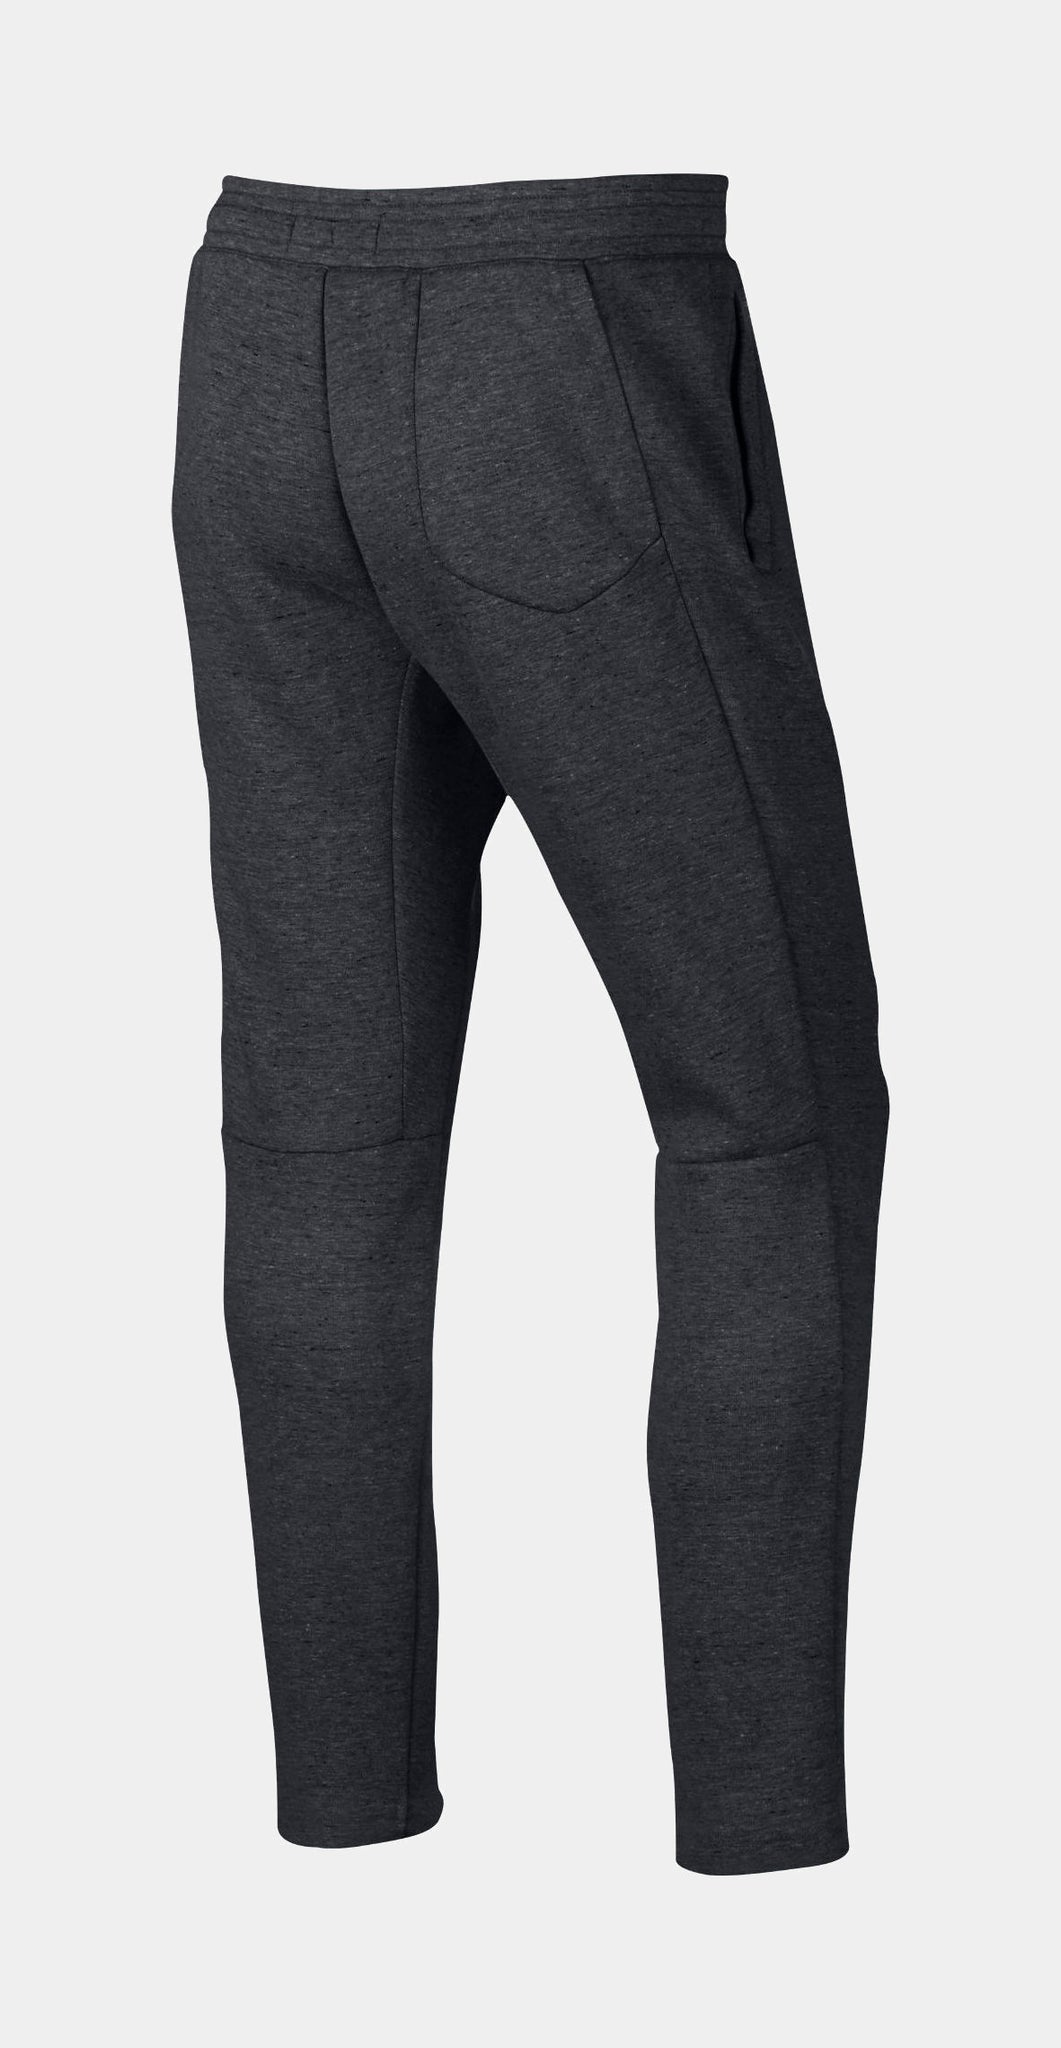 Nike Tech Fleece Reimagined Stacked Pants Black